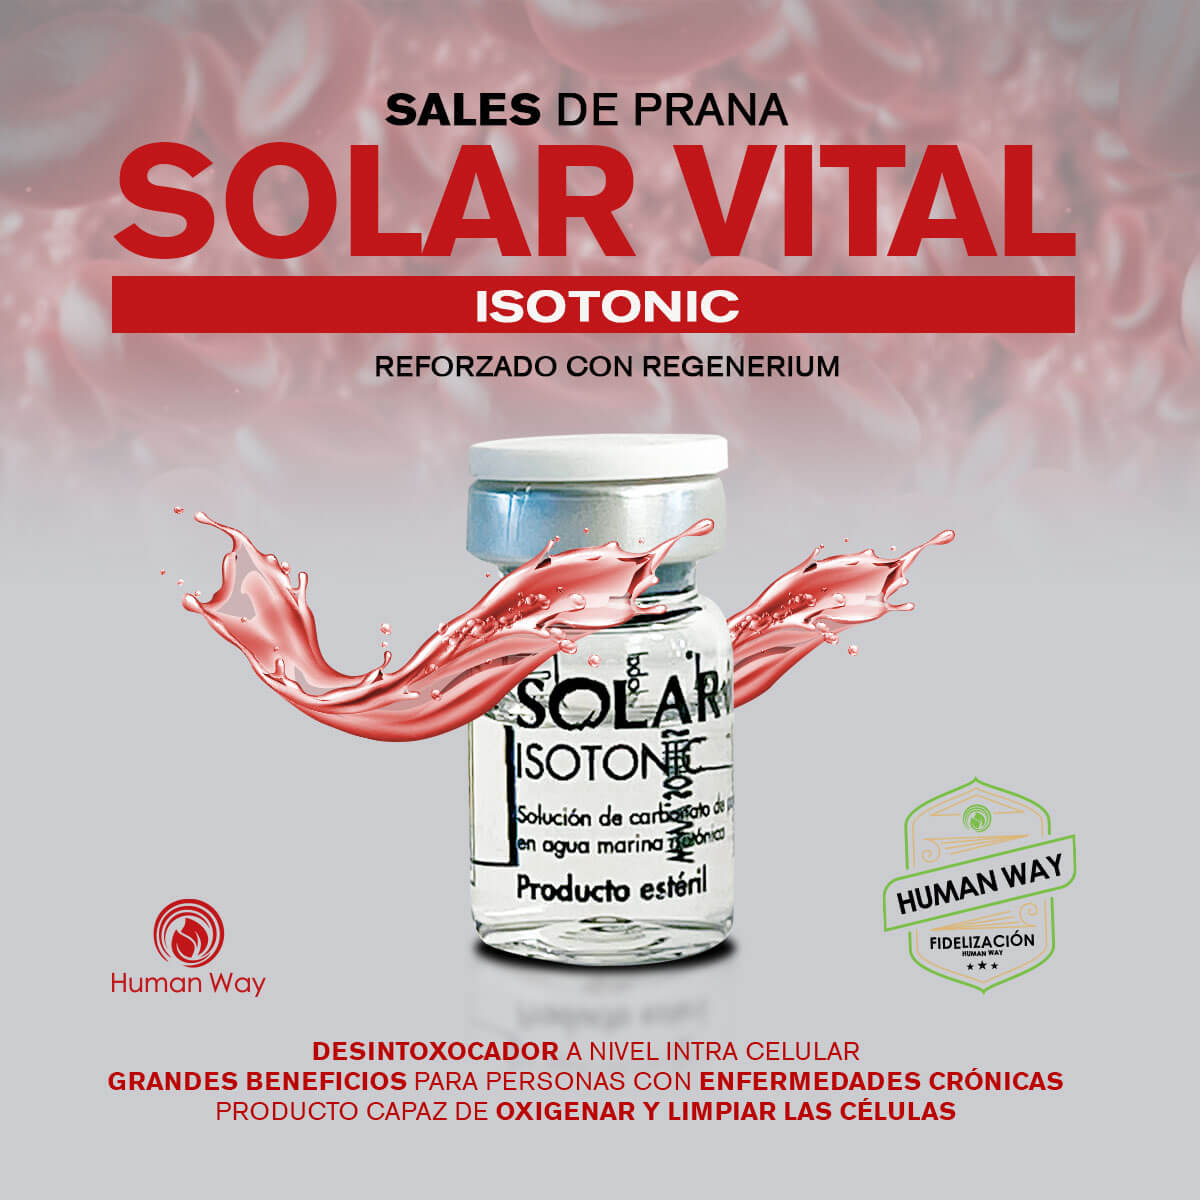 Solar Vital Isotonic